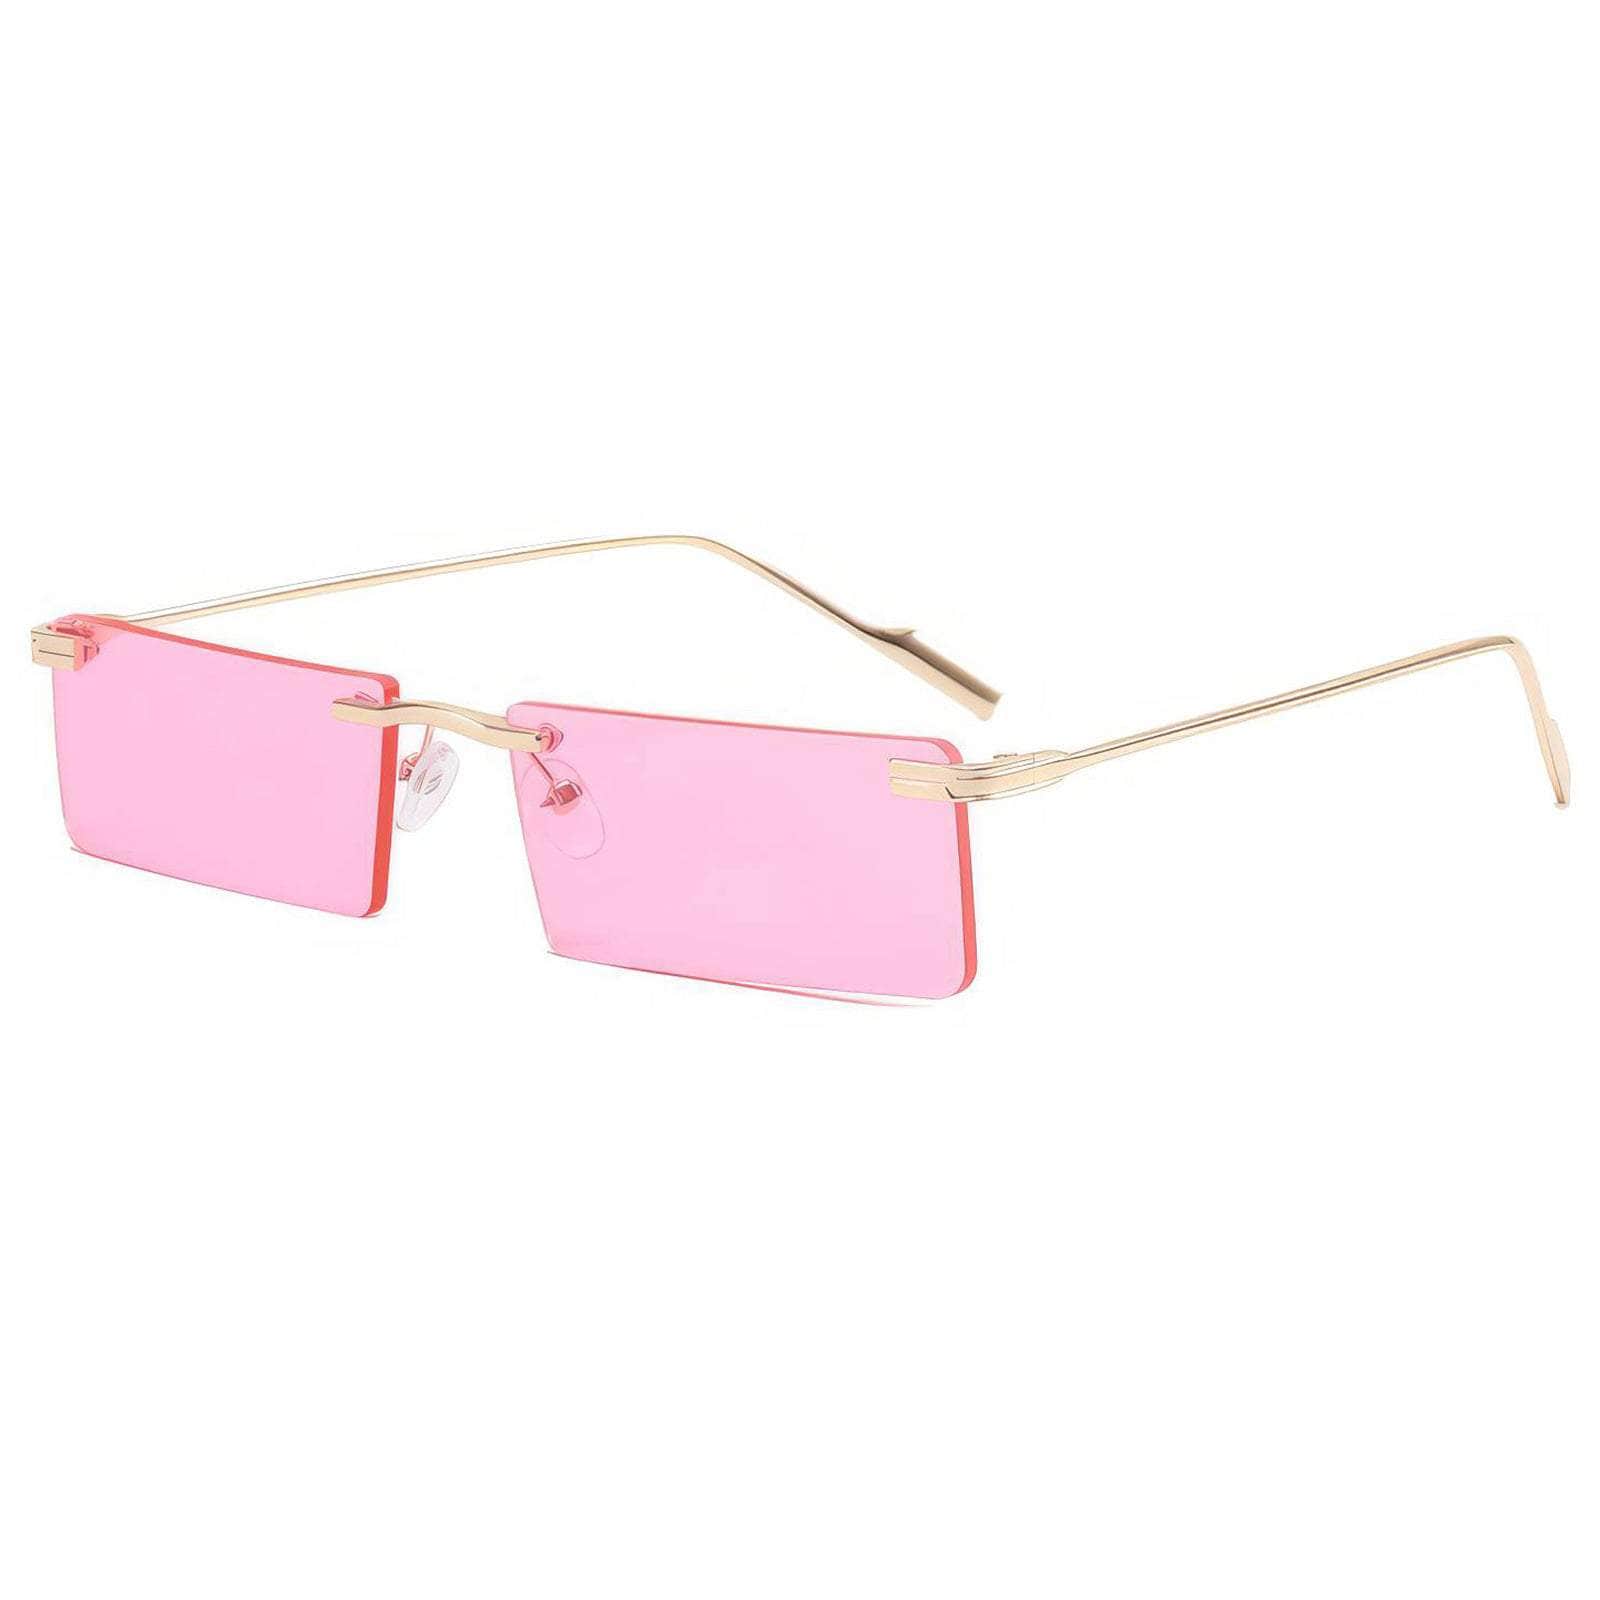 Square Small Eyewear Stylish Frames Pink/Gold / Resin